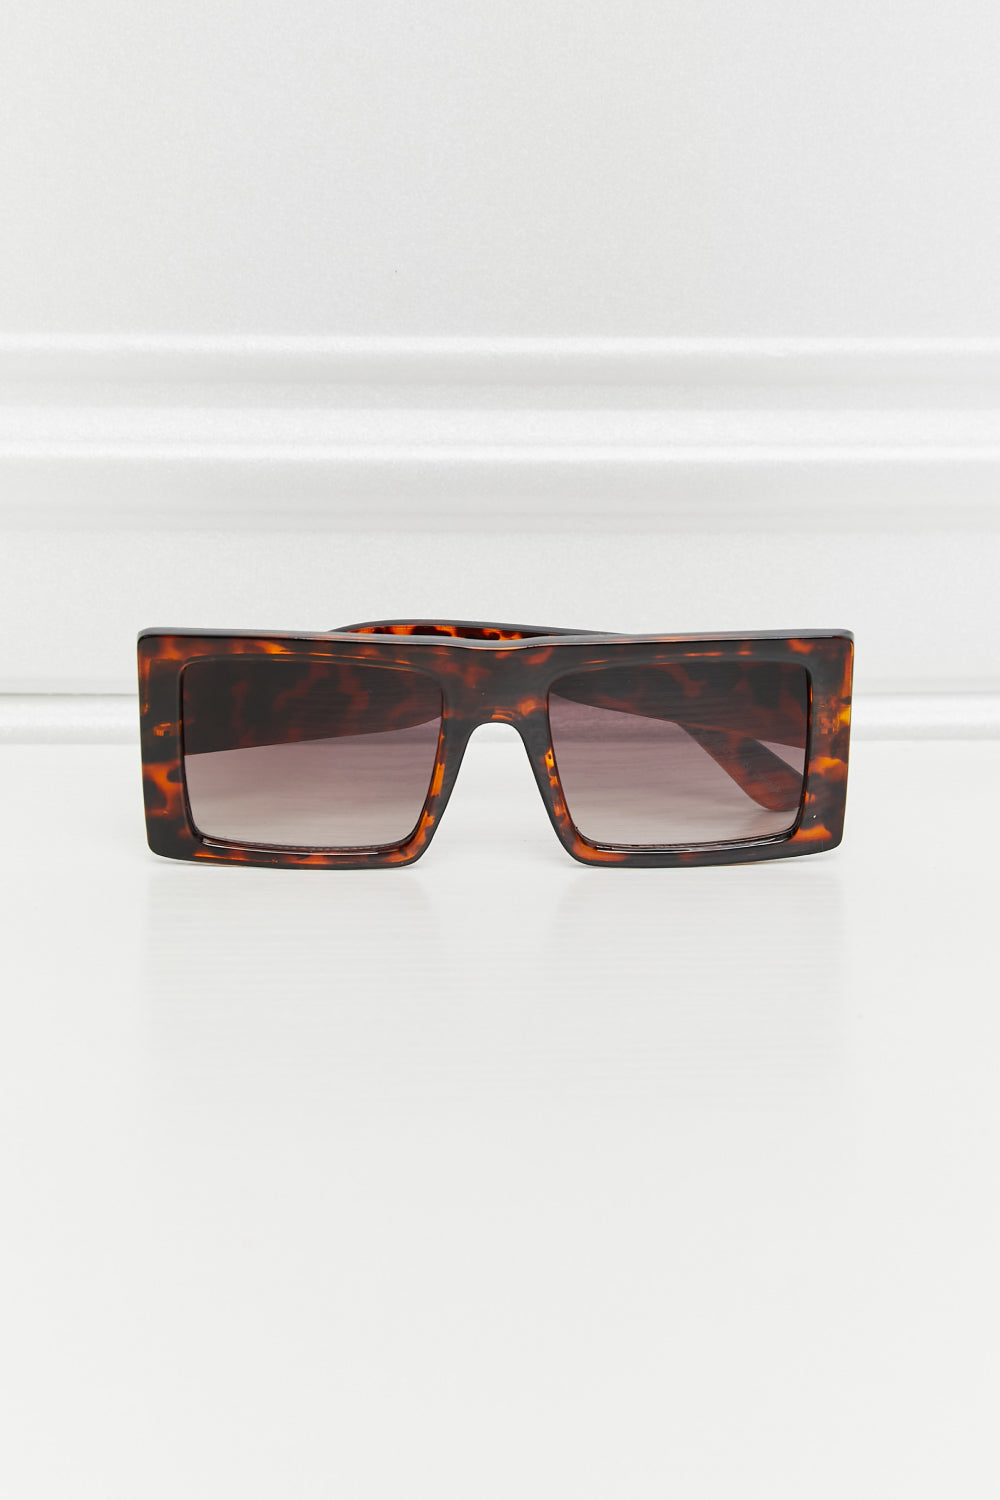 Uylee's Boutique Square Polycarbonate Sunglasses